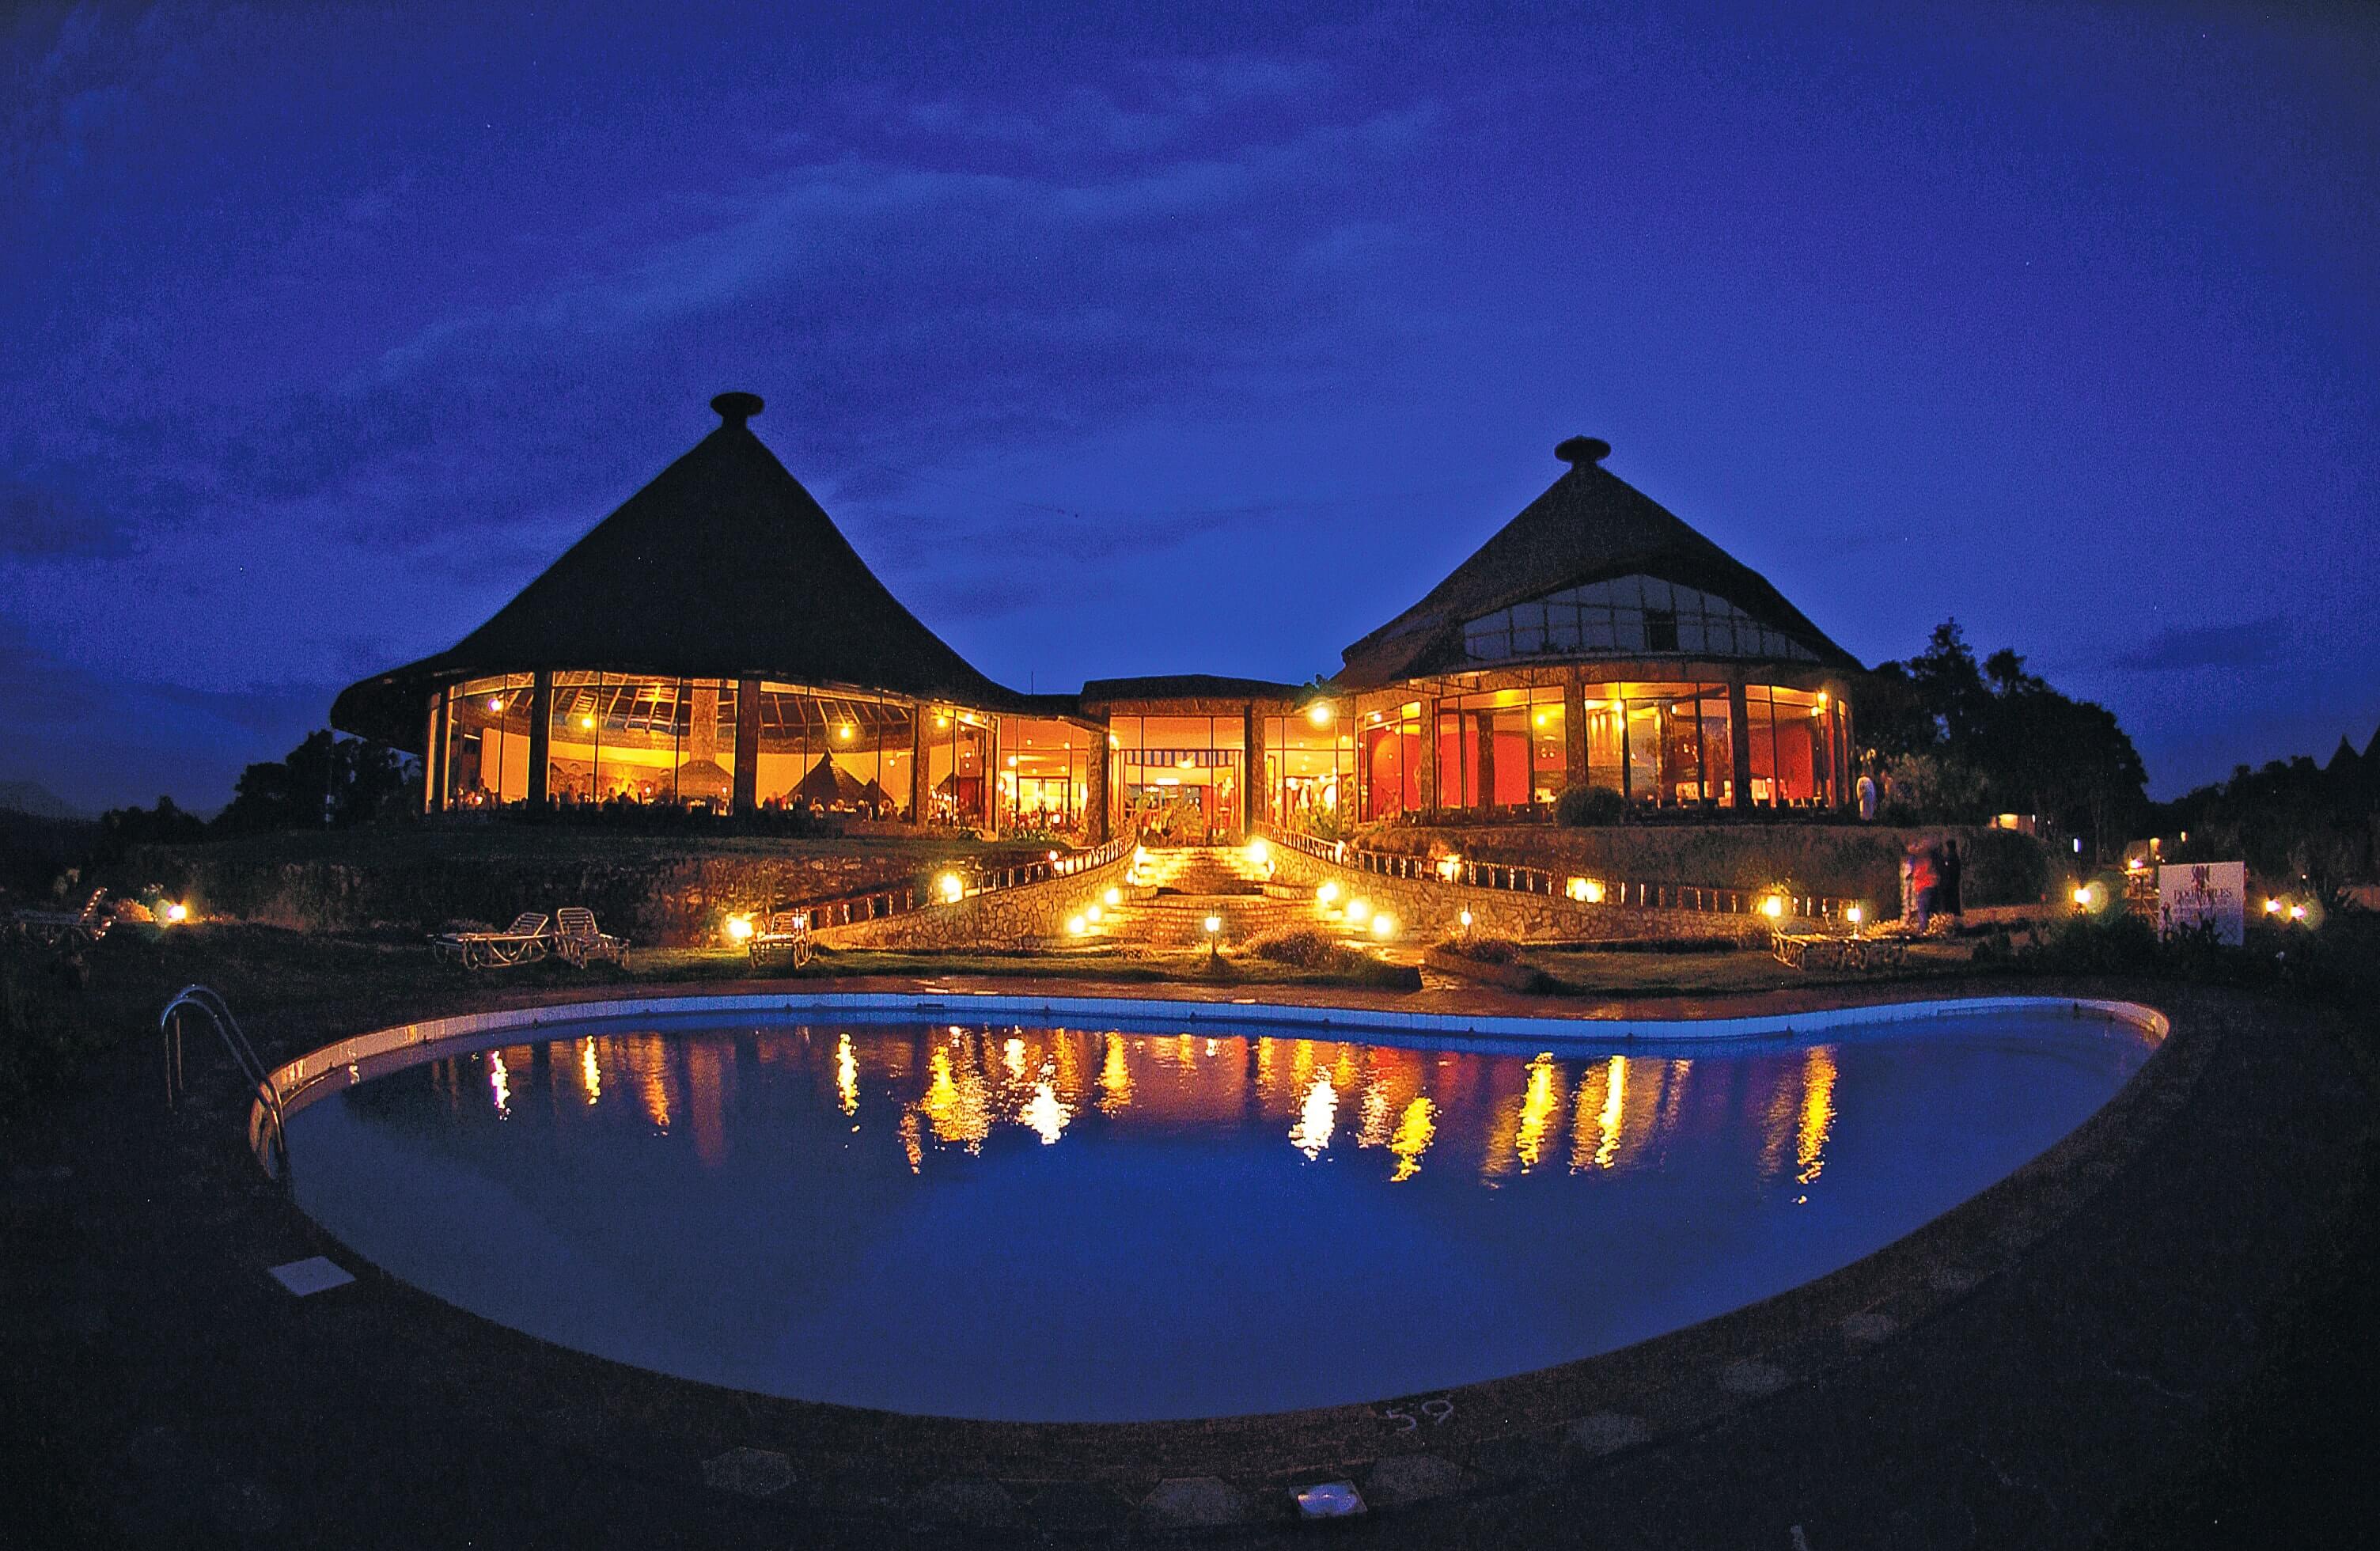 Ngorongoro HOTEL|ンゴロンゴロ ホテル